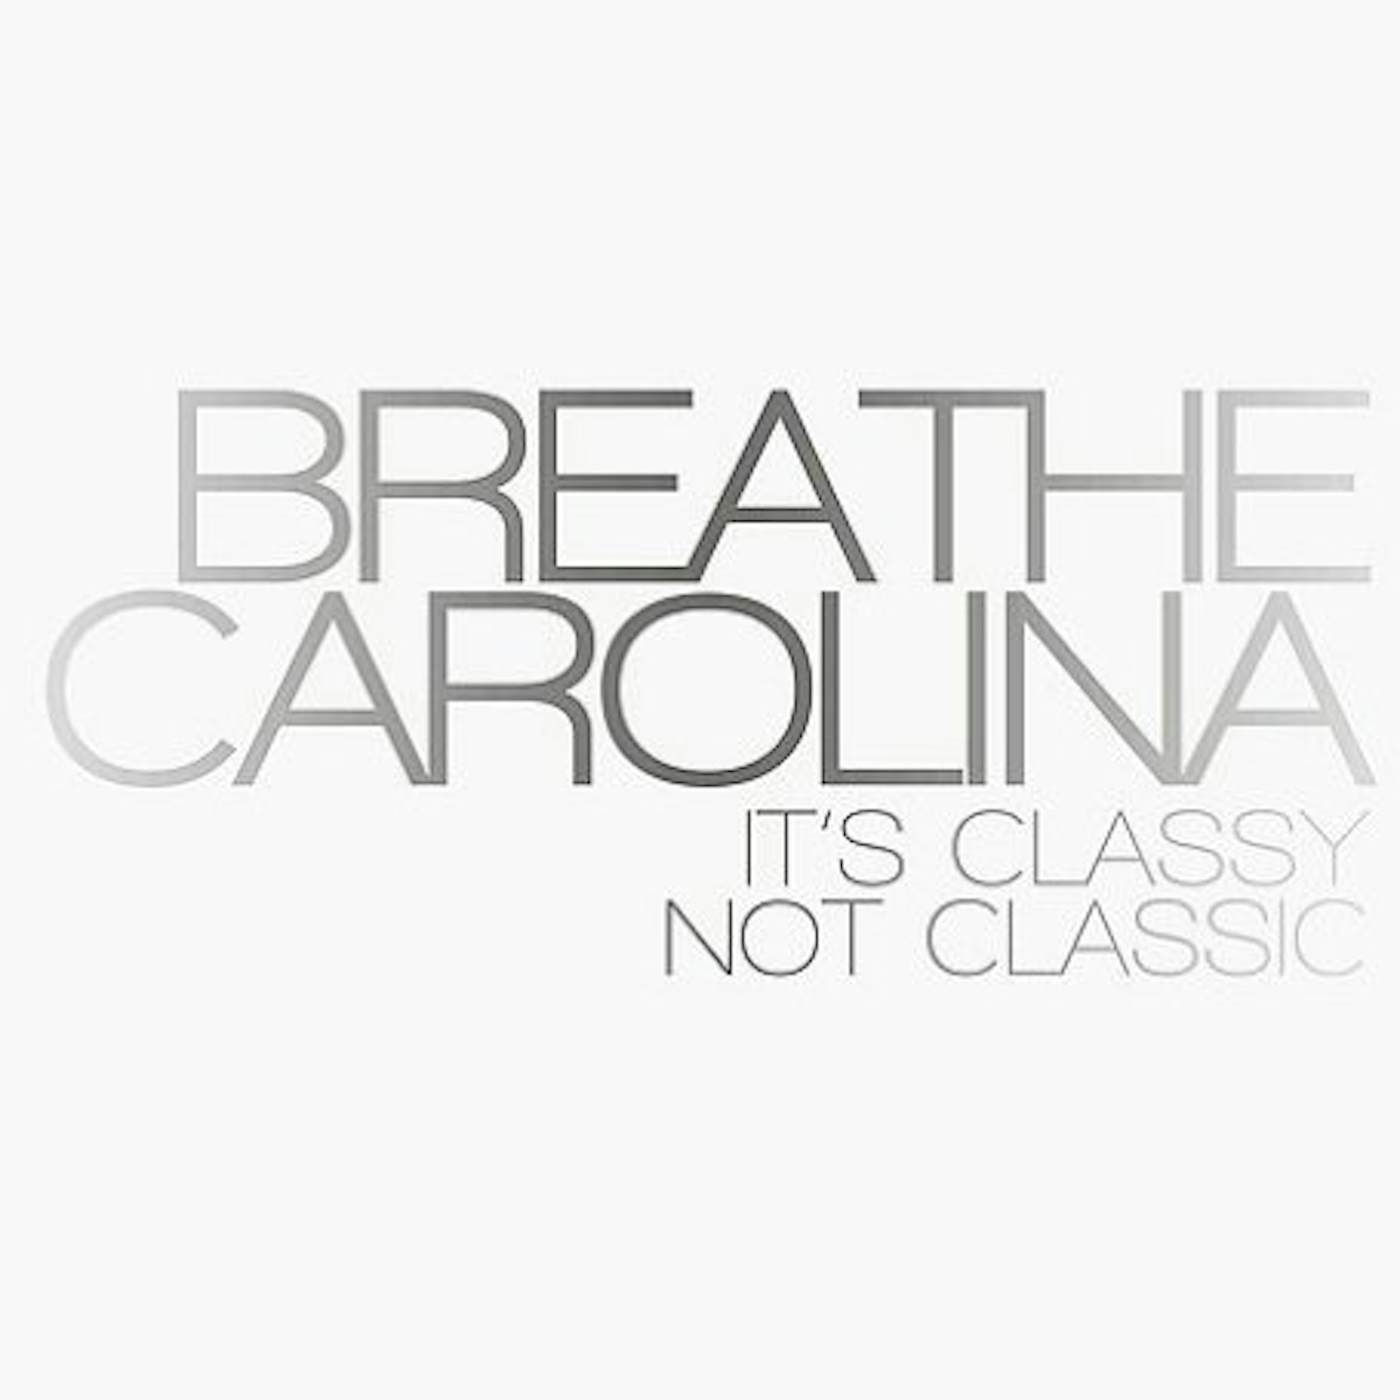 Breathe Carolina IT'S CLASSY NOT CLASSIC CD